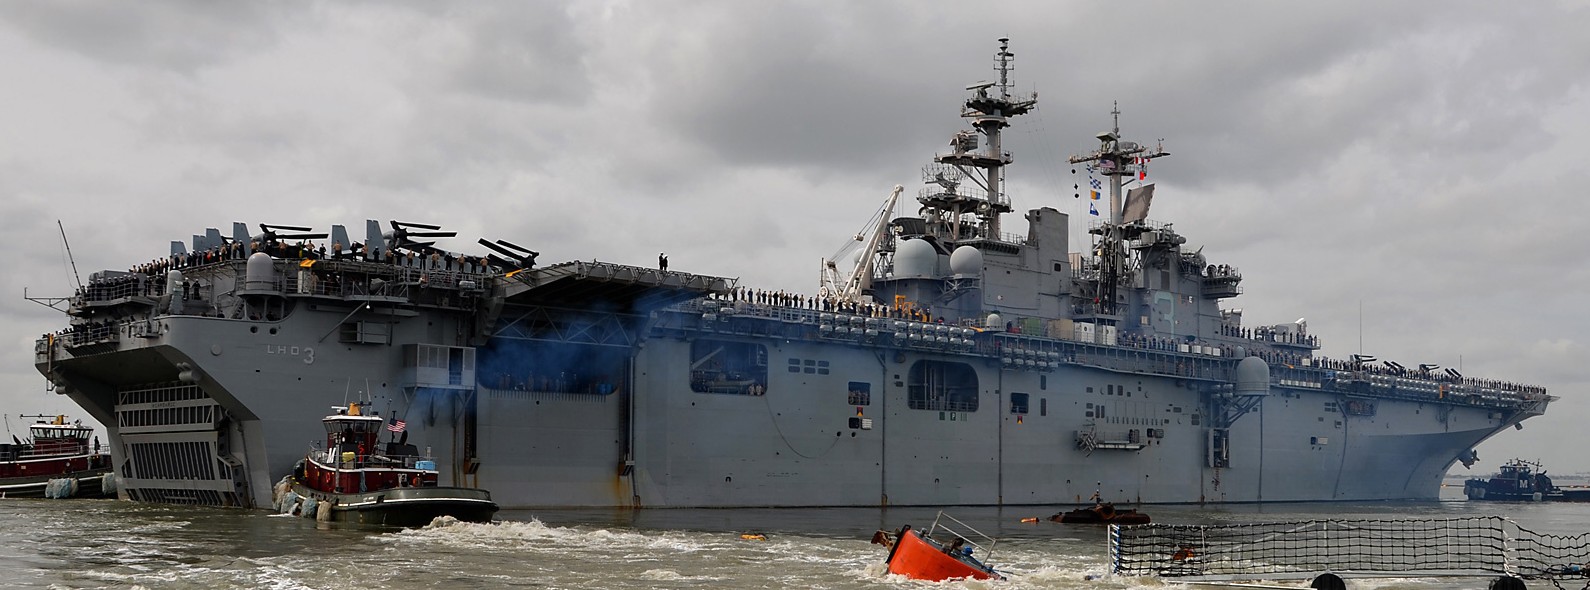 lhd-3 uss kearsarge wasp class amphibious assault ship landing dock us navy marines departing norfolk virginia 98